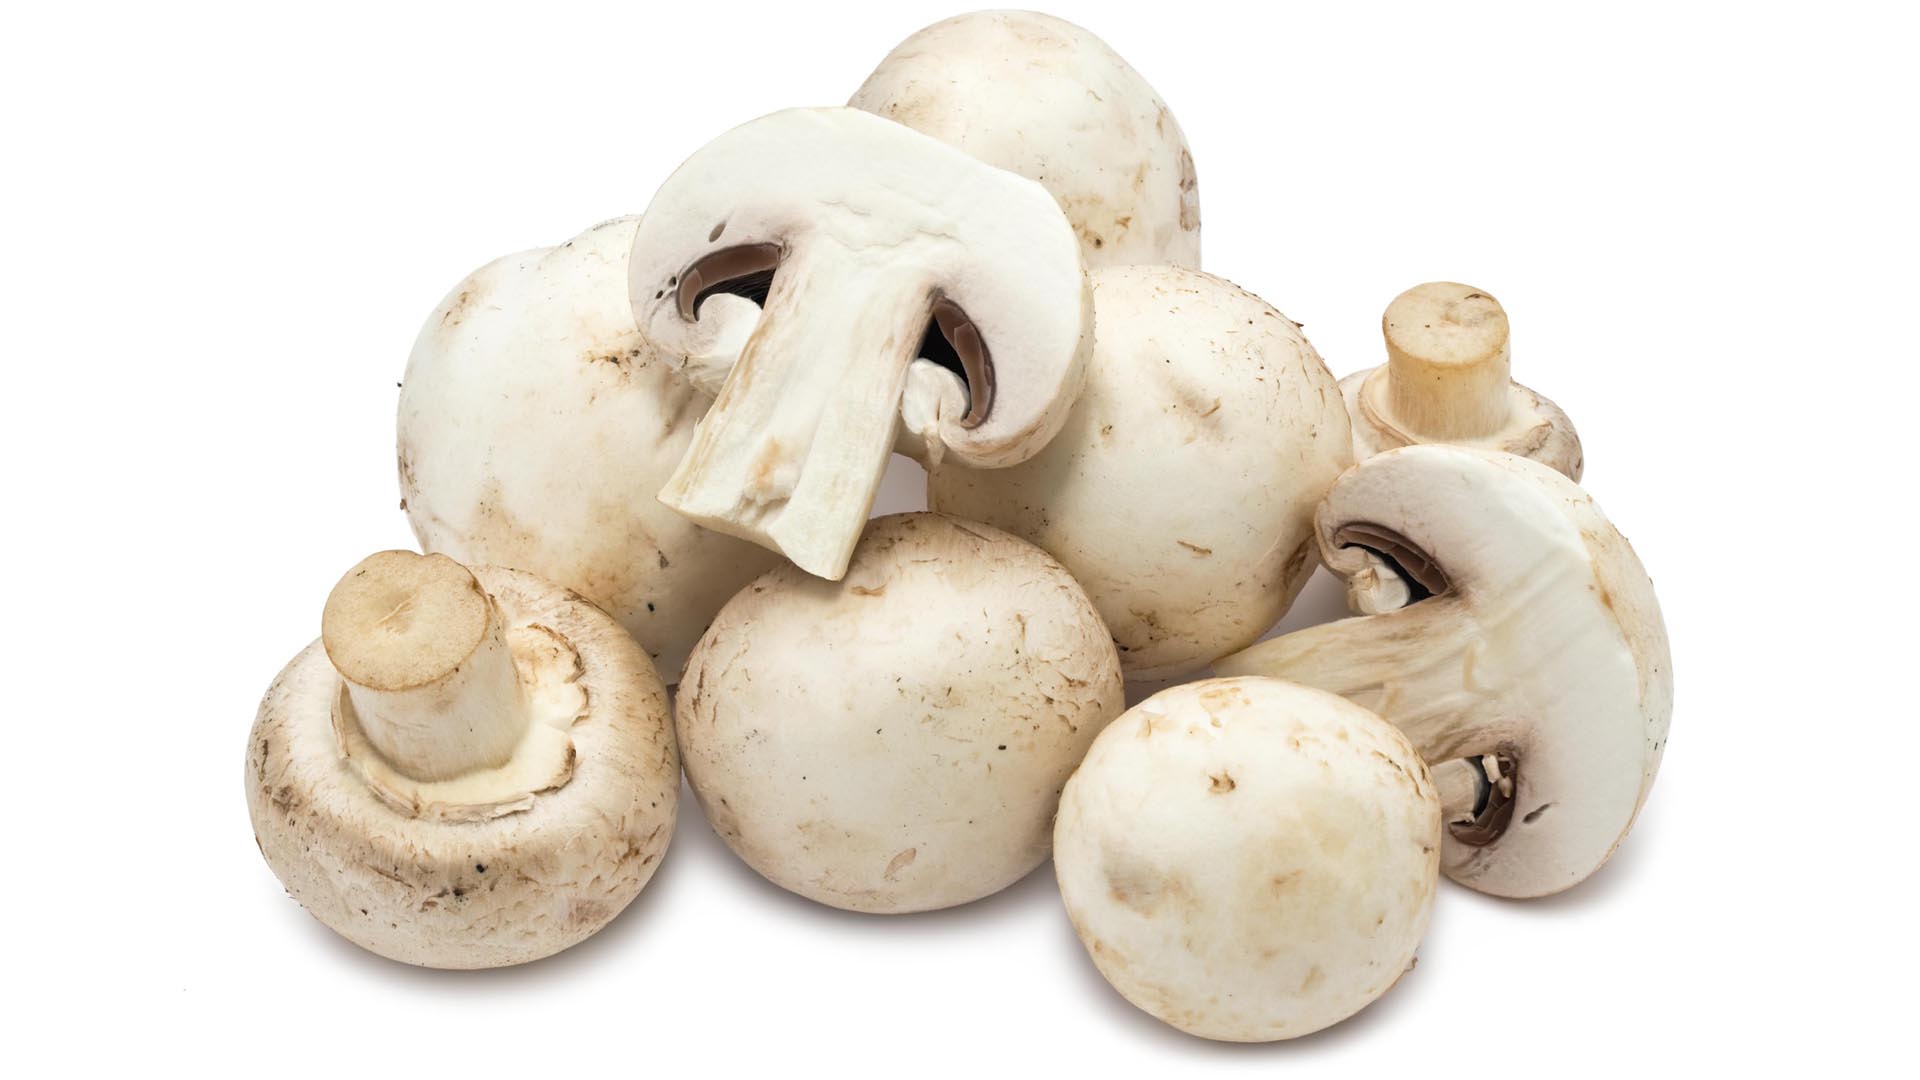 Mushrooms Finding Way Into Iranian Food Basket | Financial Tribune